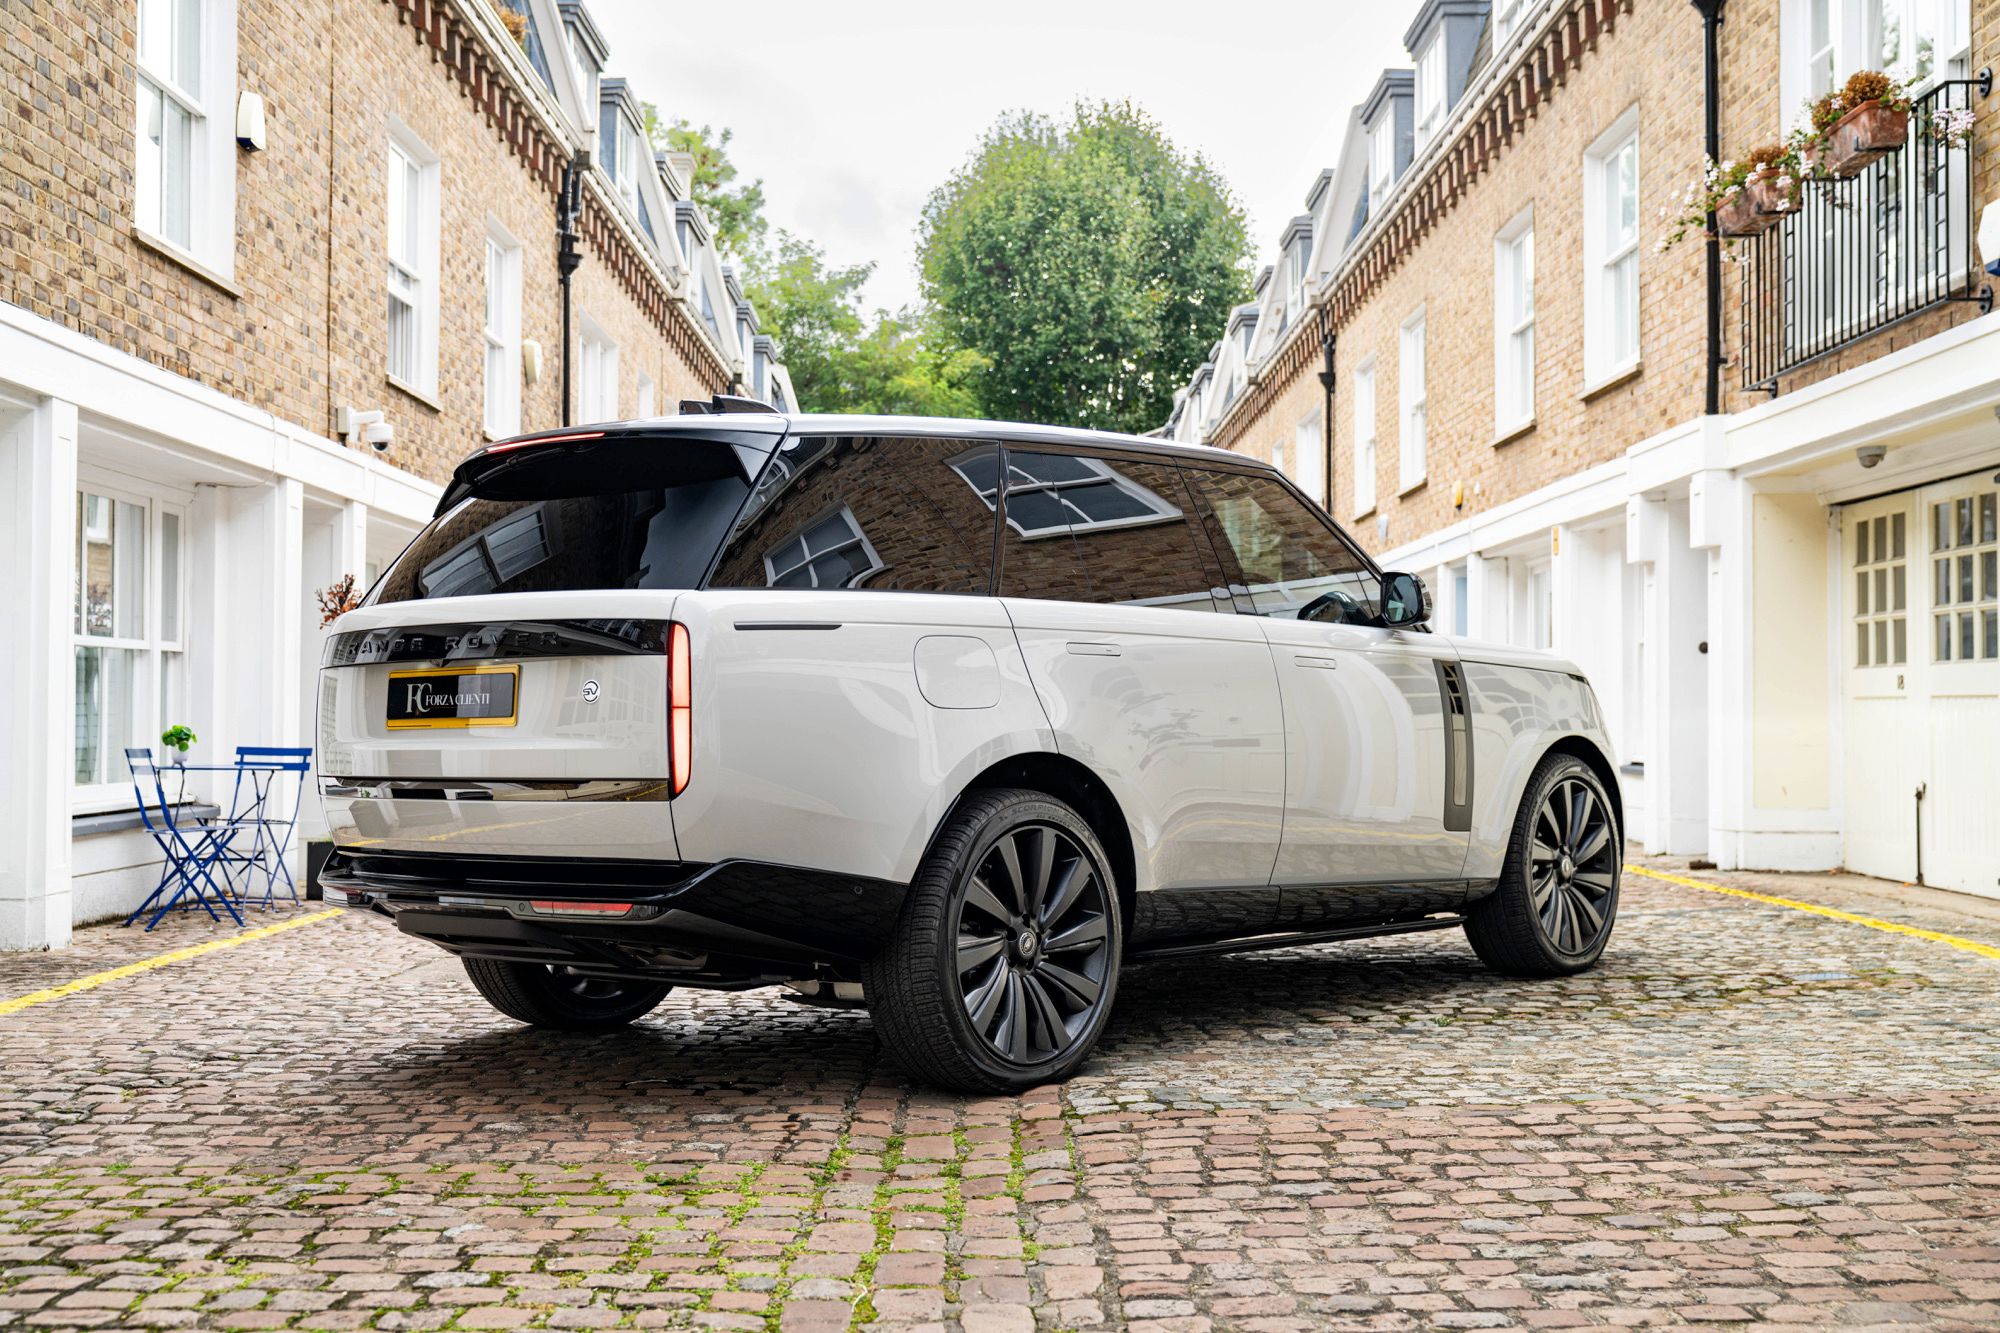 New £250,000 Range Rover Lansdowne Edition unveiled